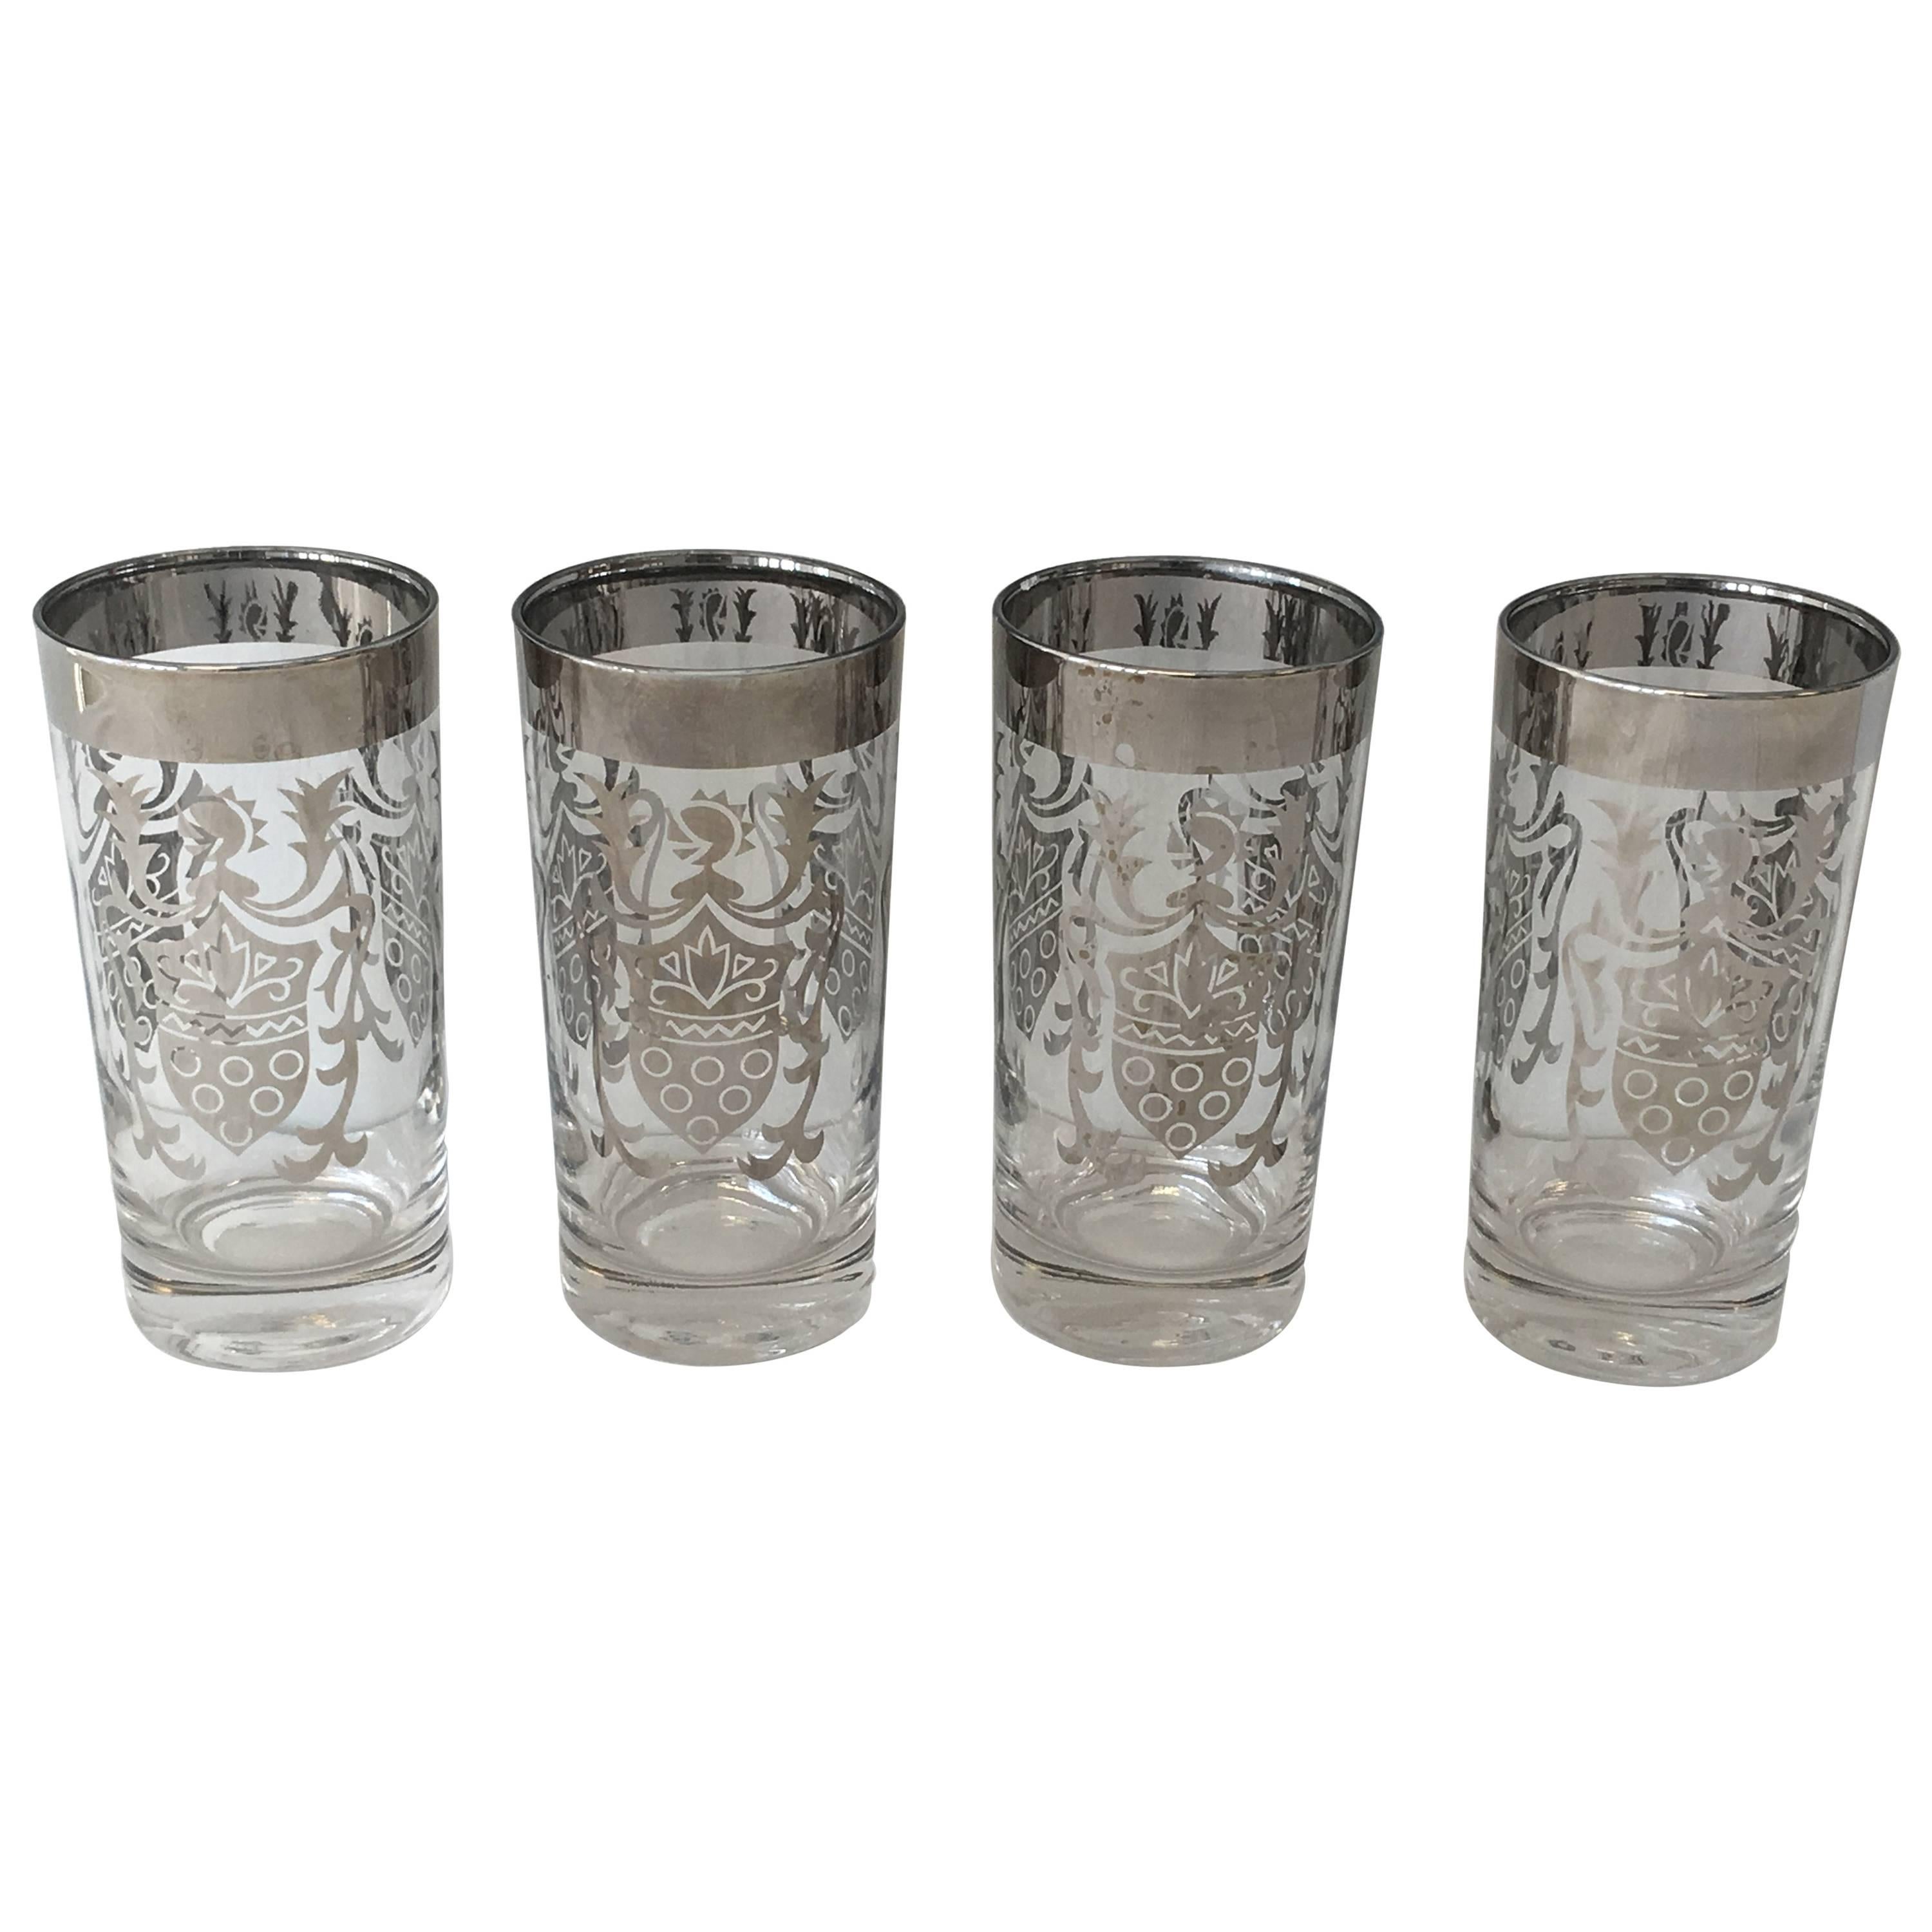 Dorothy Thorpe Platinum Cocktail Glasses with Crest Motif, Set of Four